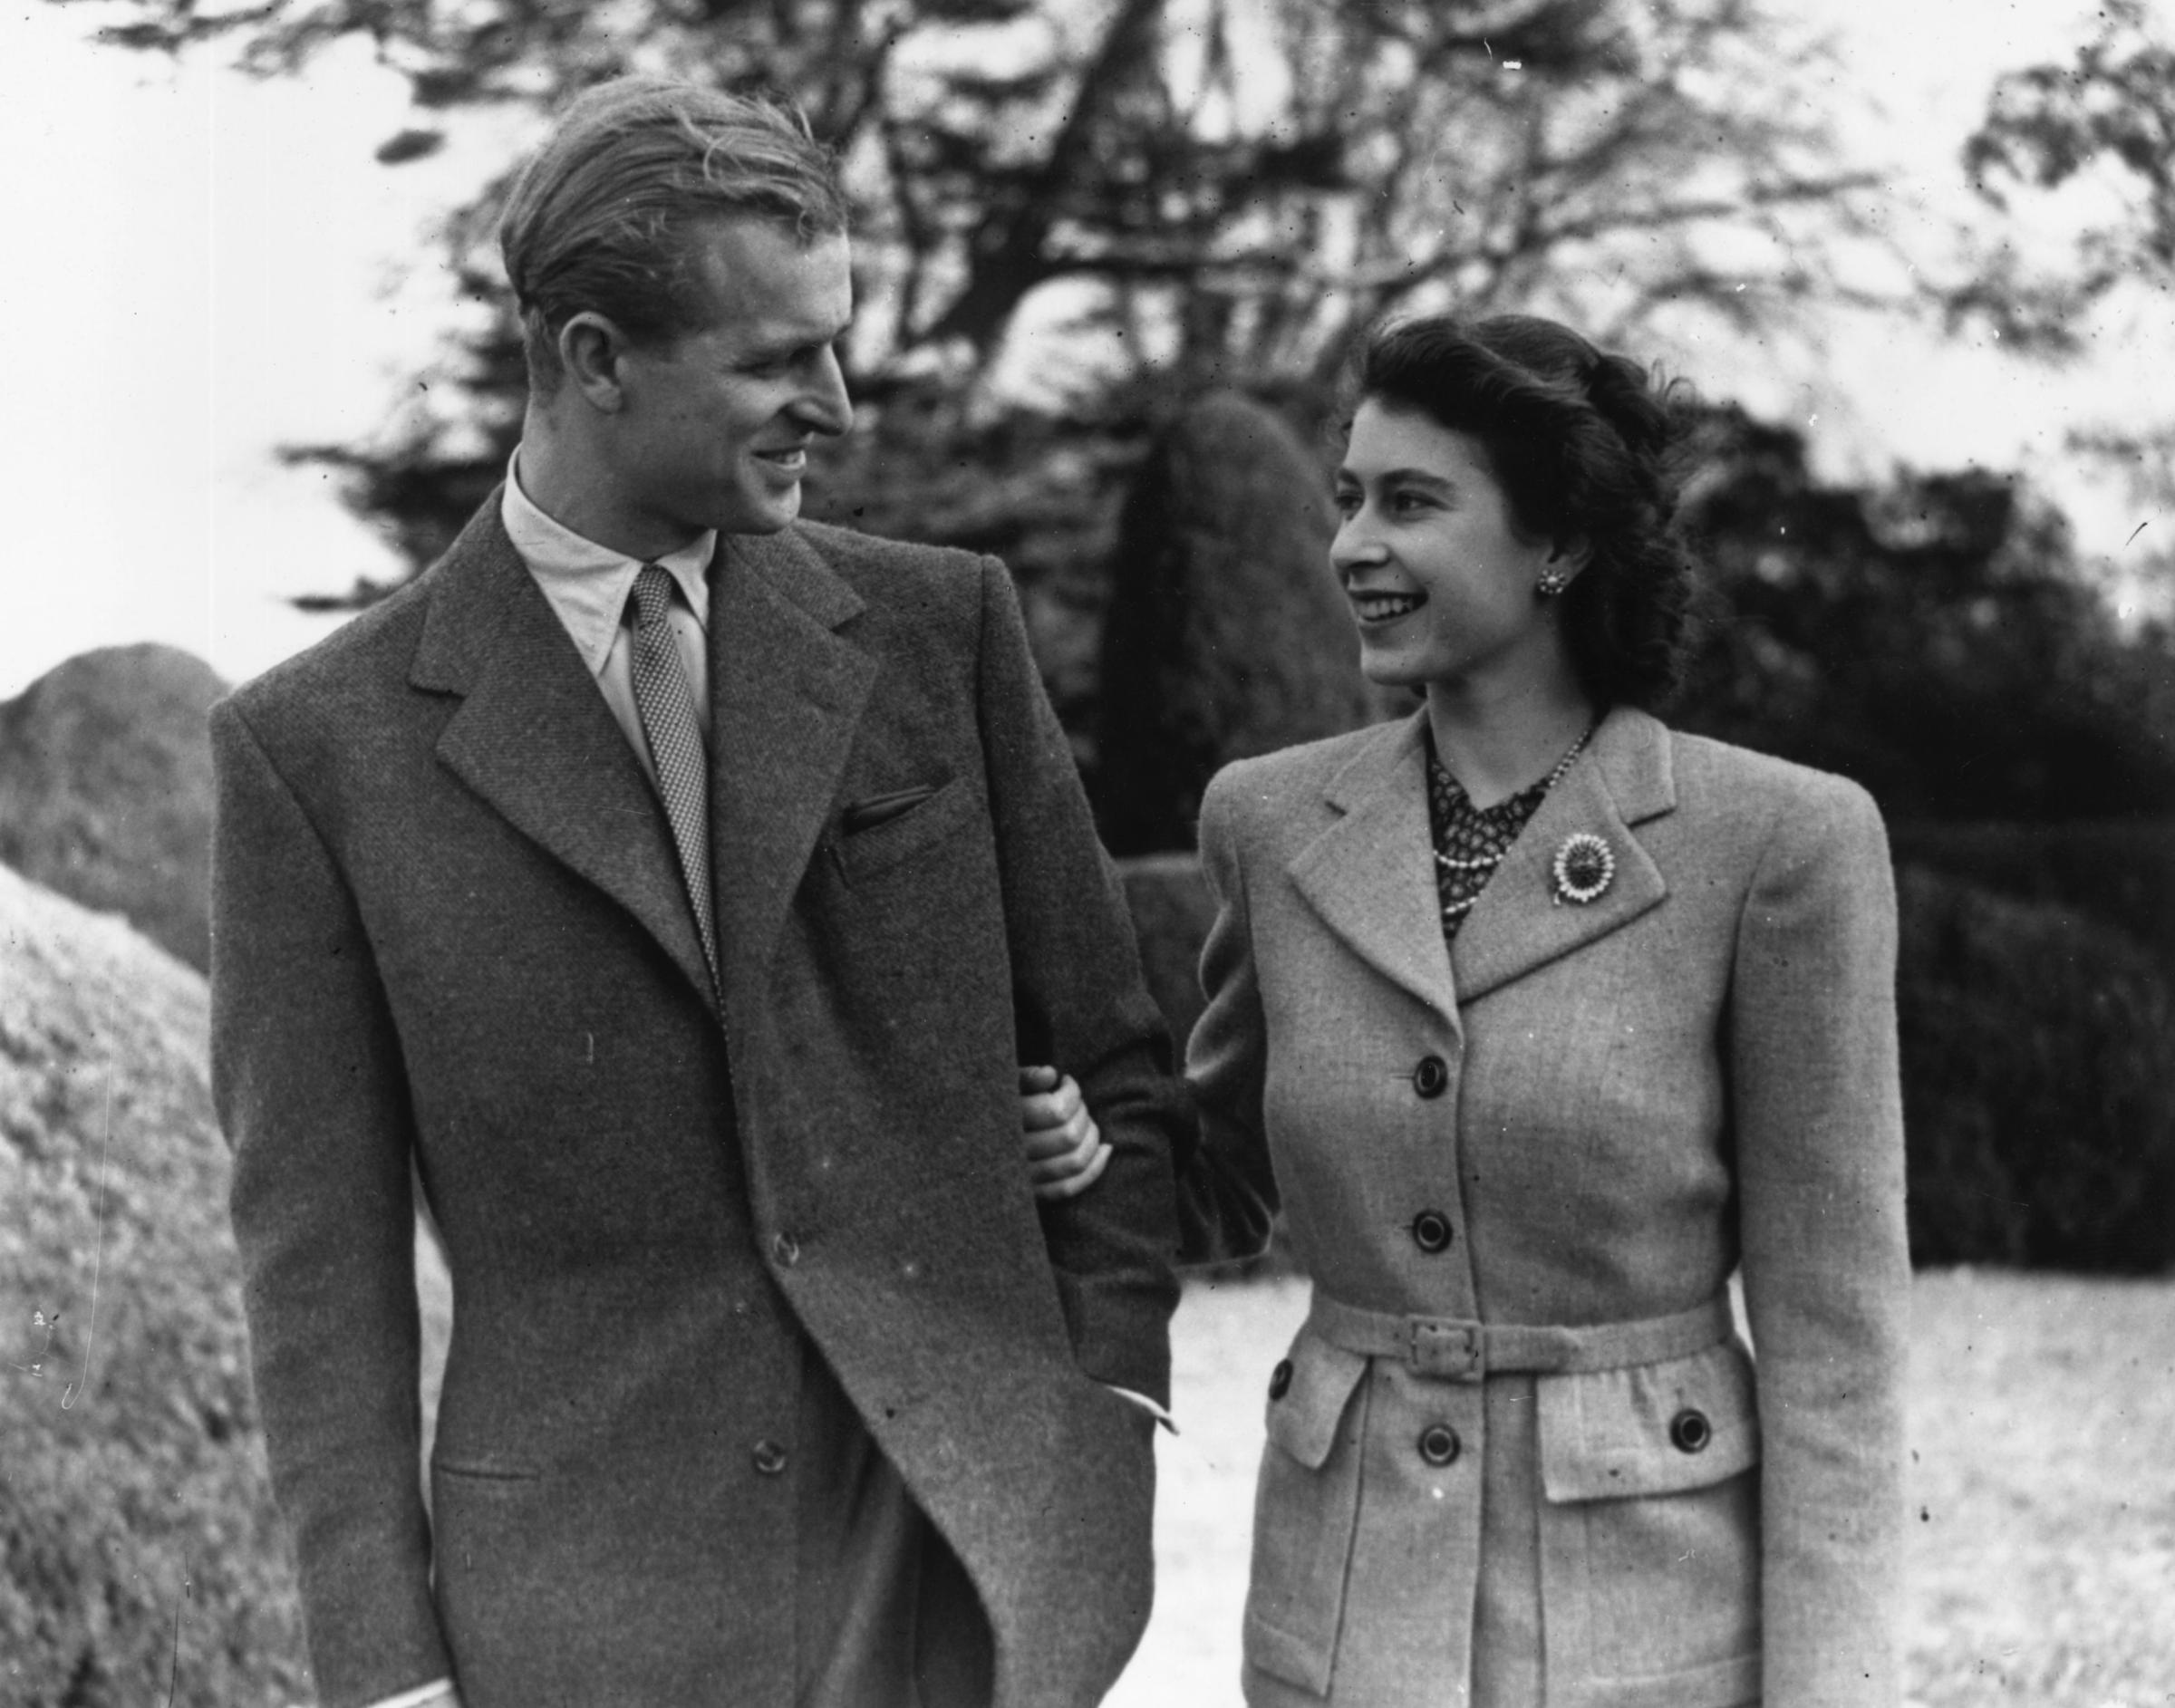 Princess Elizabeth and Prince Philip walk during their honeymoon at Broadlands, Romsey, Hampshire, Nov. 24, 1947.